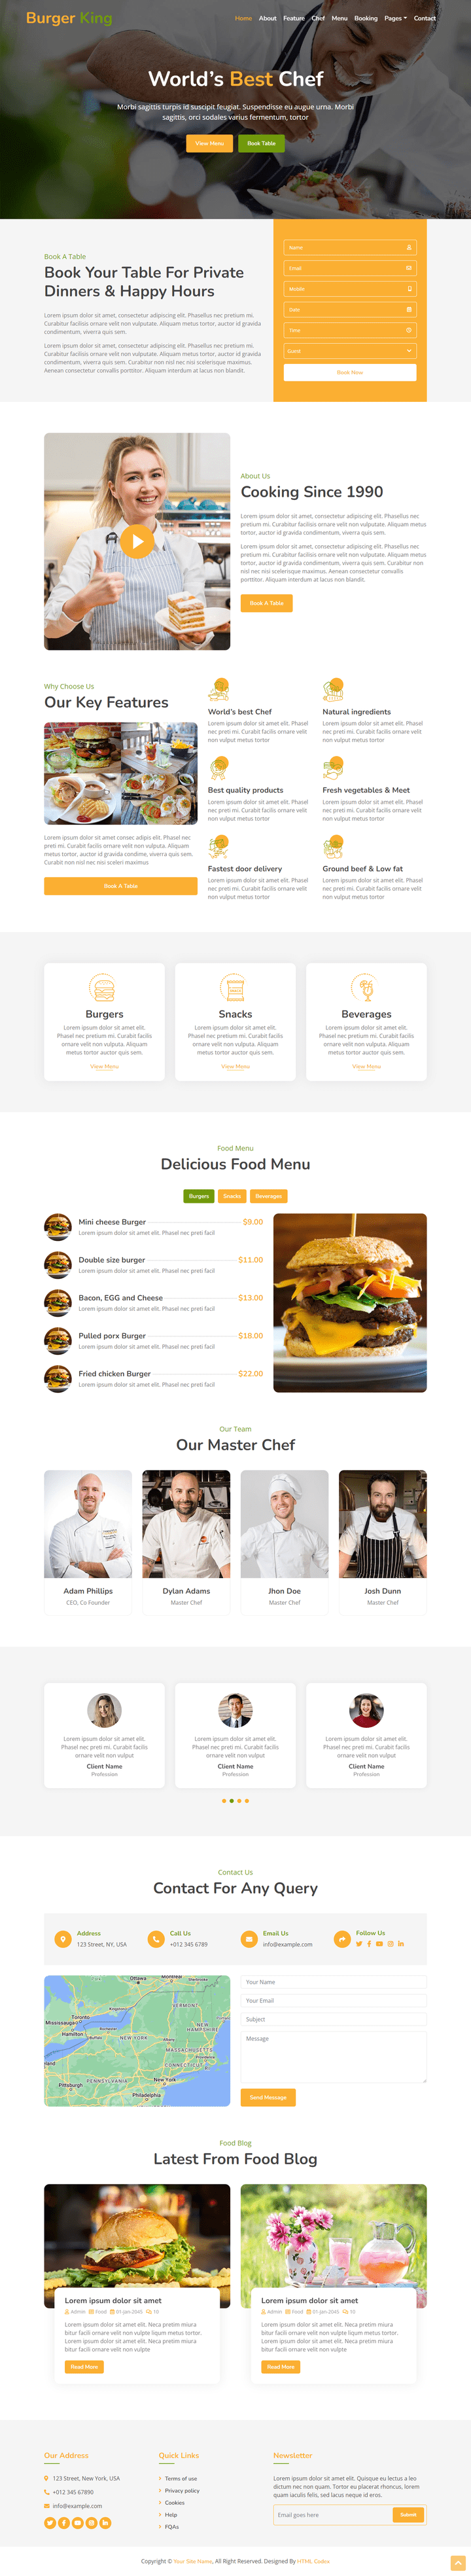 Responsive Design for a Restaurant Website